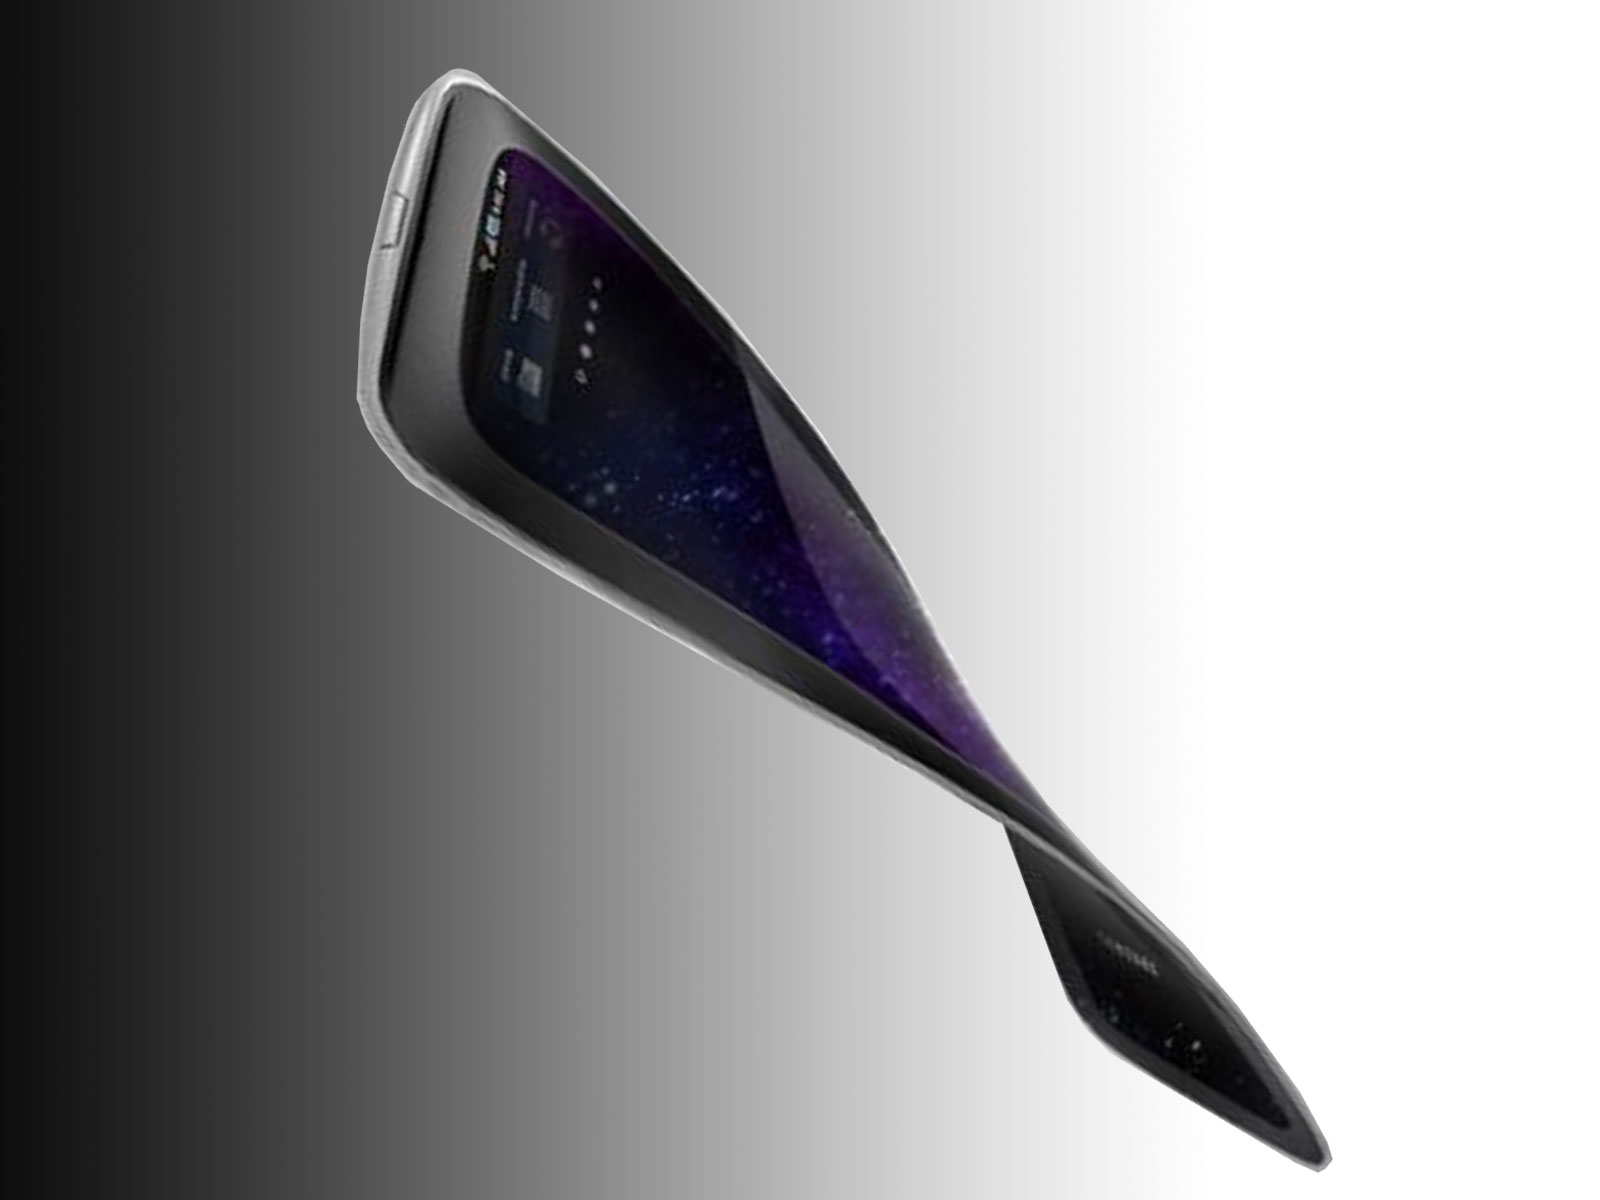 Samsung Galaxy S21 Market